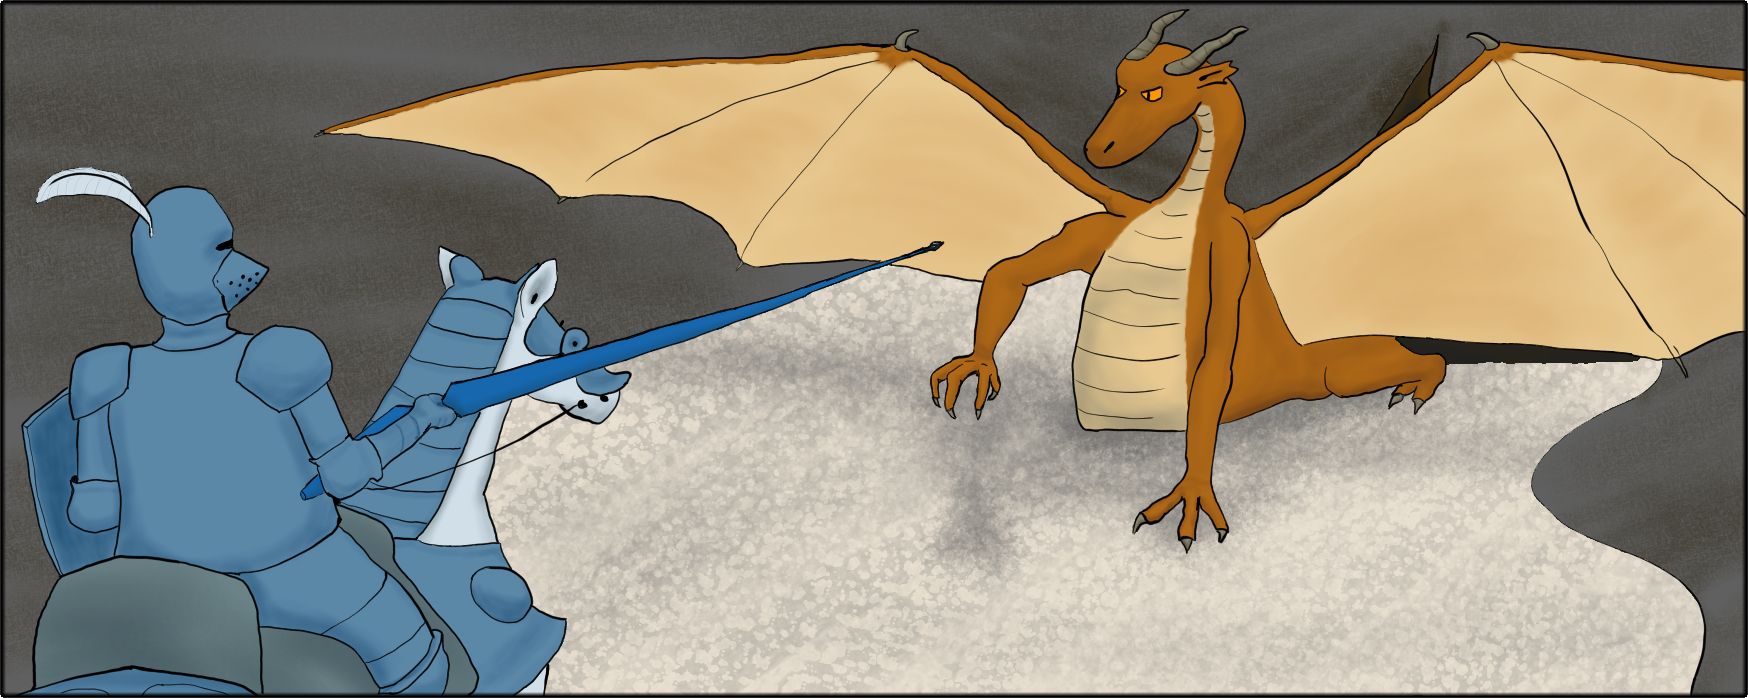 A mounted knight charging twoard a dragon.